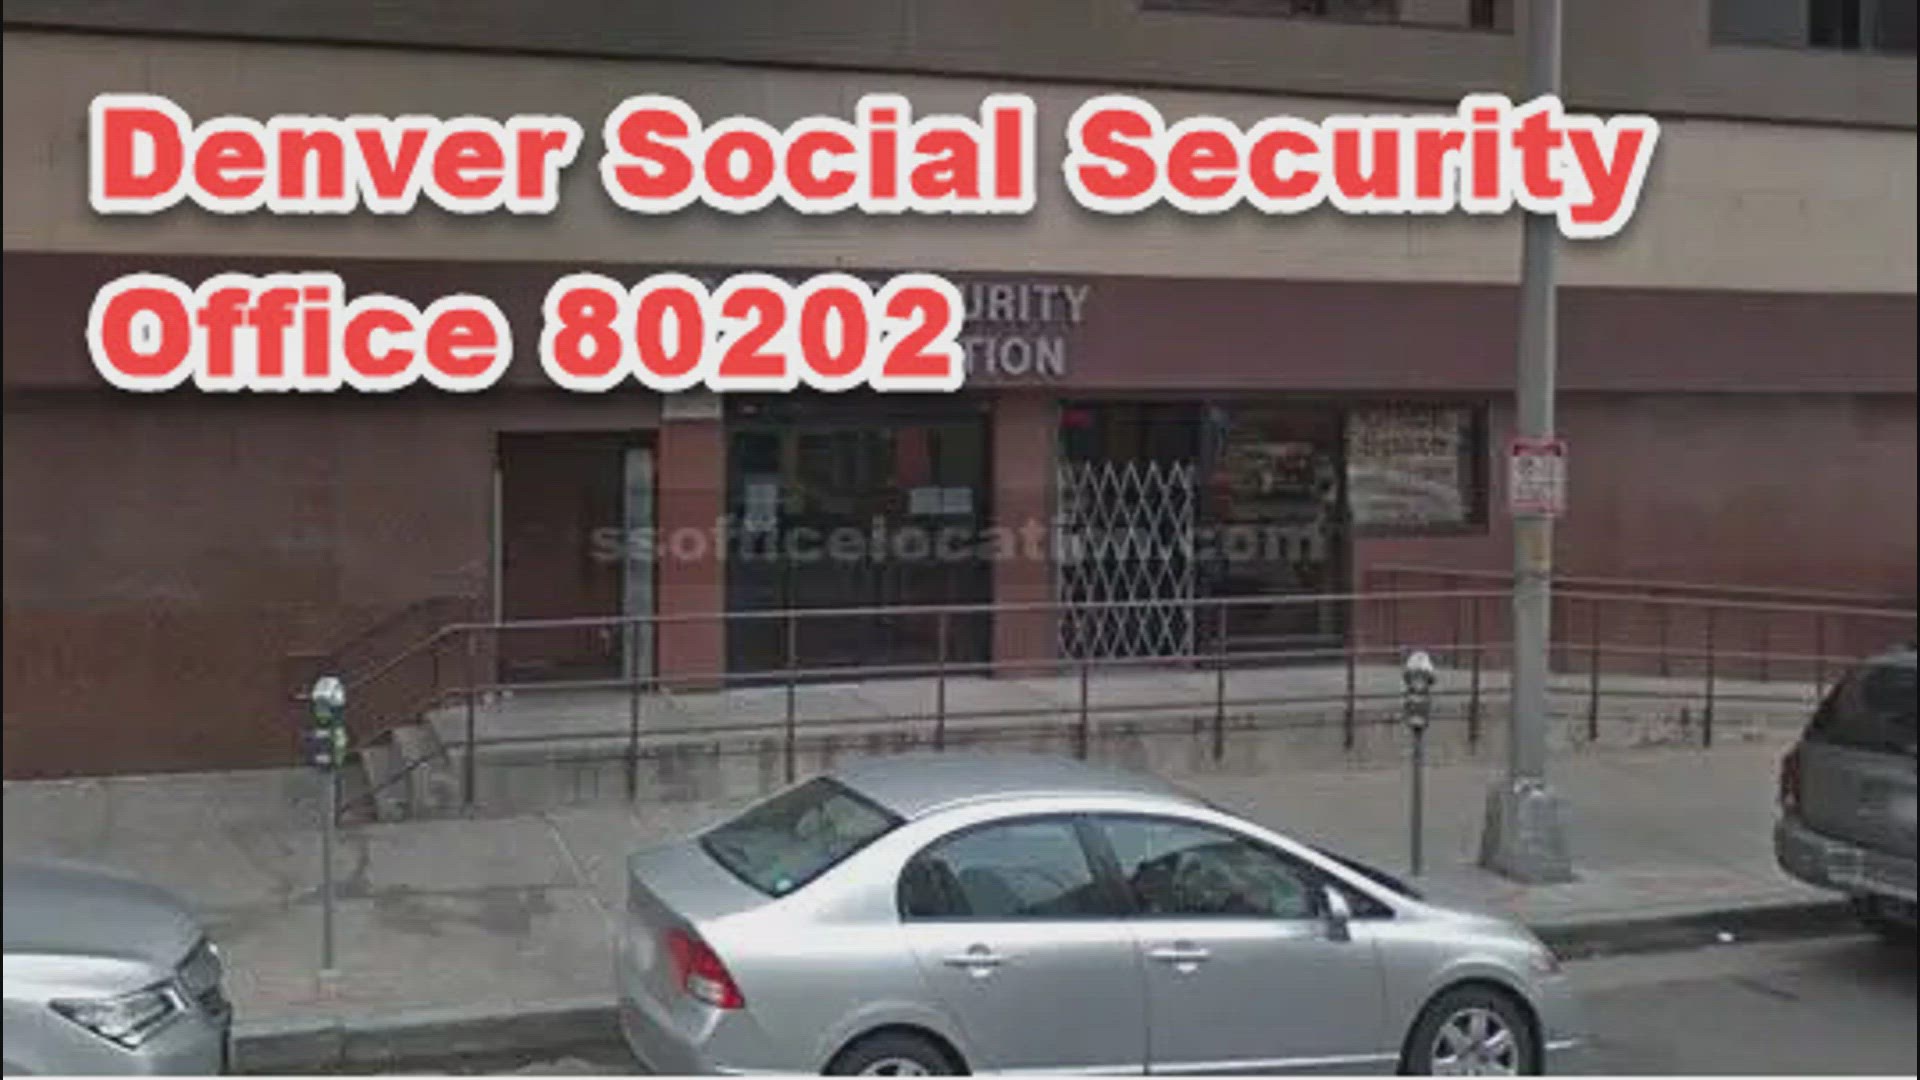 Denver, CO, 80202, Social Security Office 